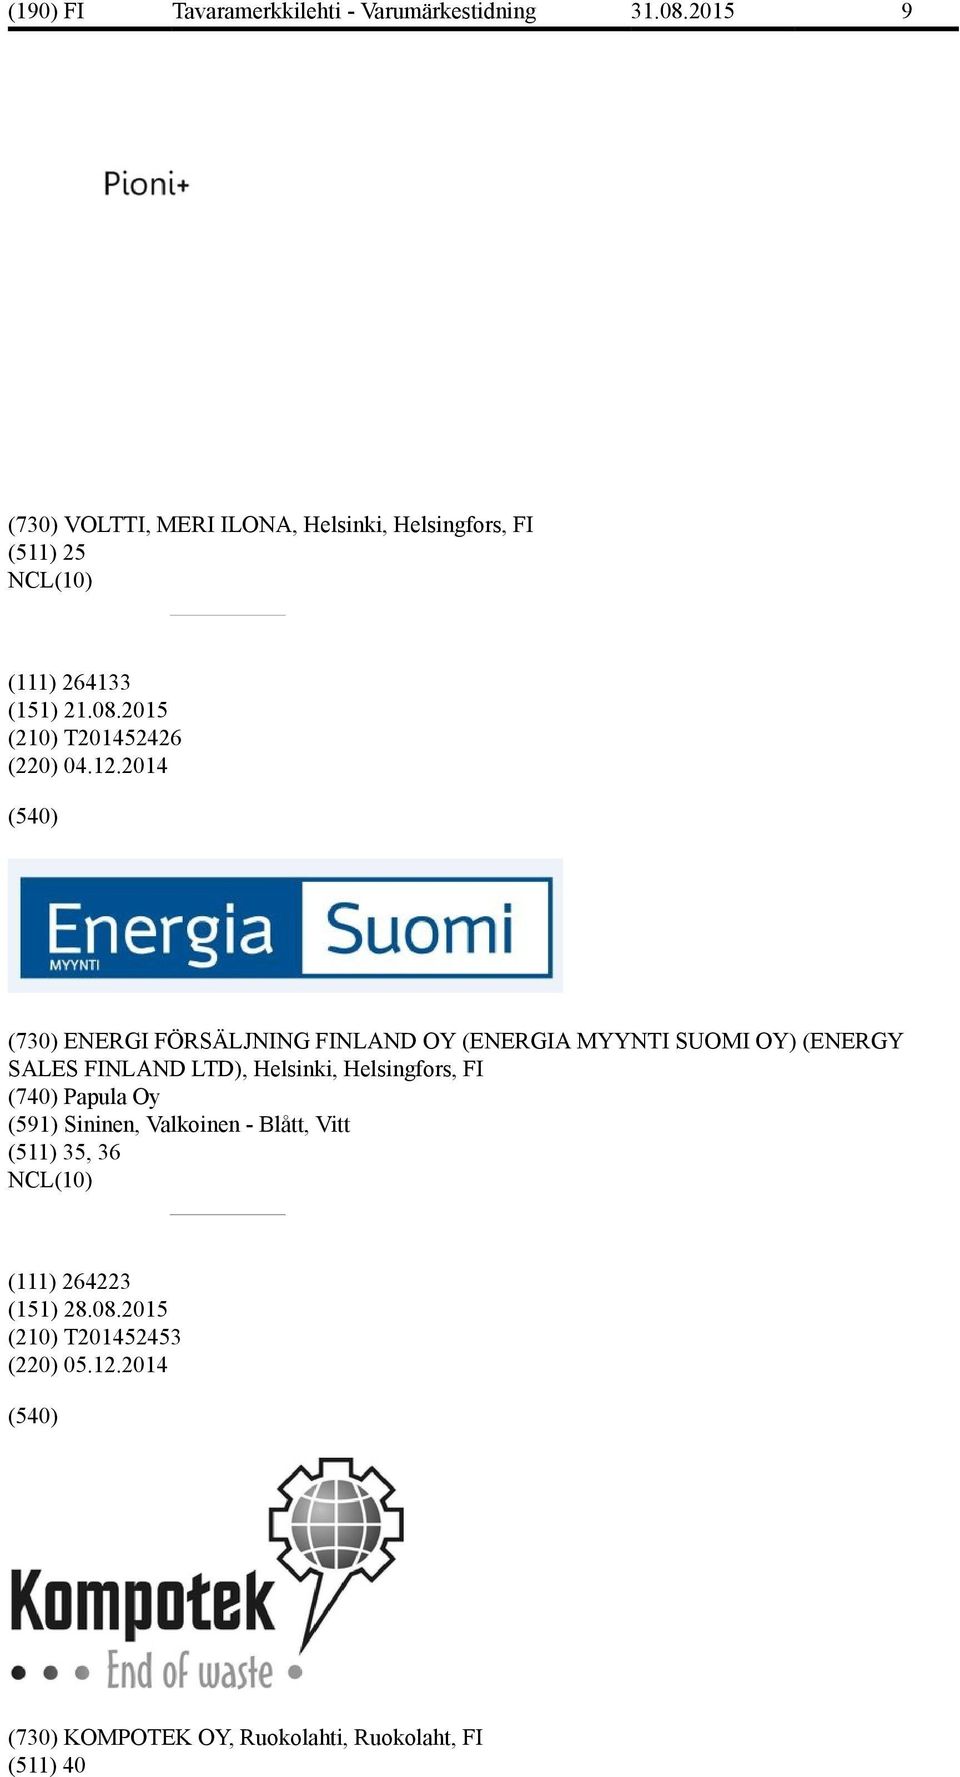 2014 (730) ENERGI FÖRSÄLJNING FINLAND OY (ENERGIA MYYNTI SUOMI OY) (ENERGY SALES FINLAND LTD),